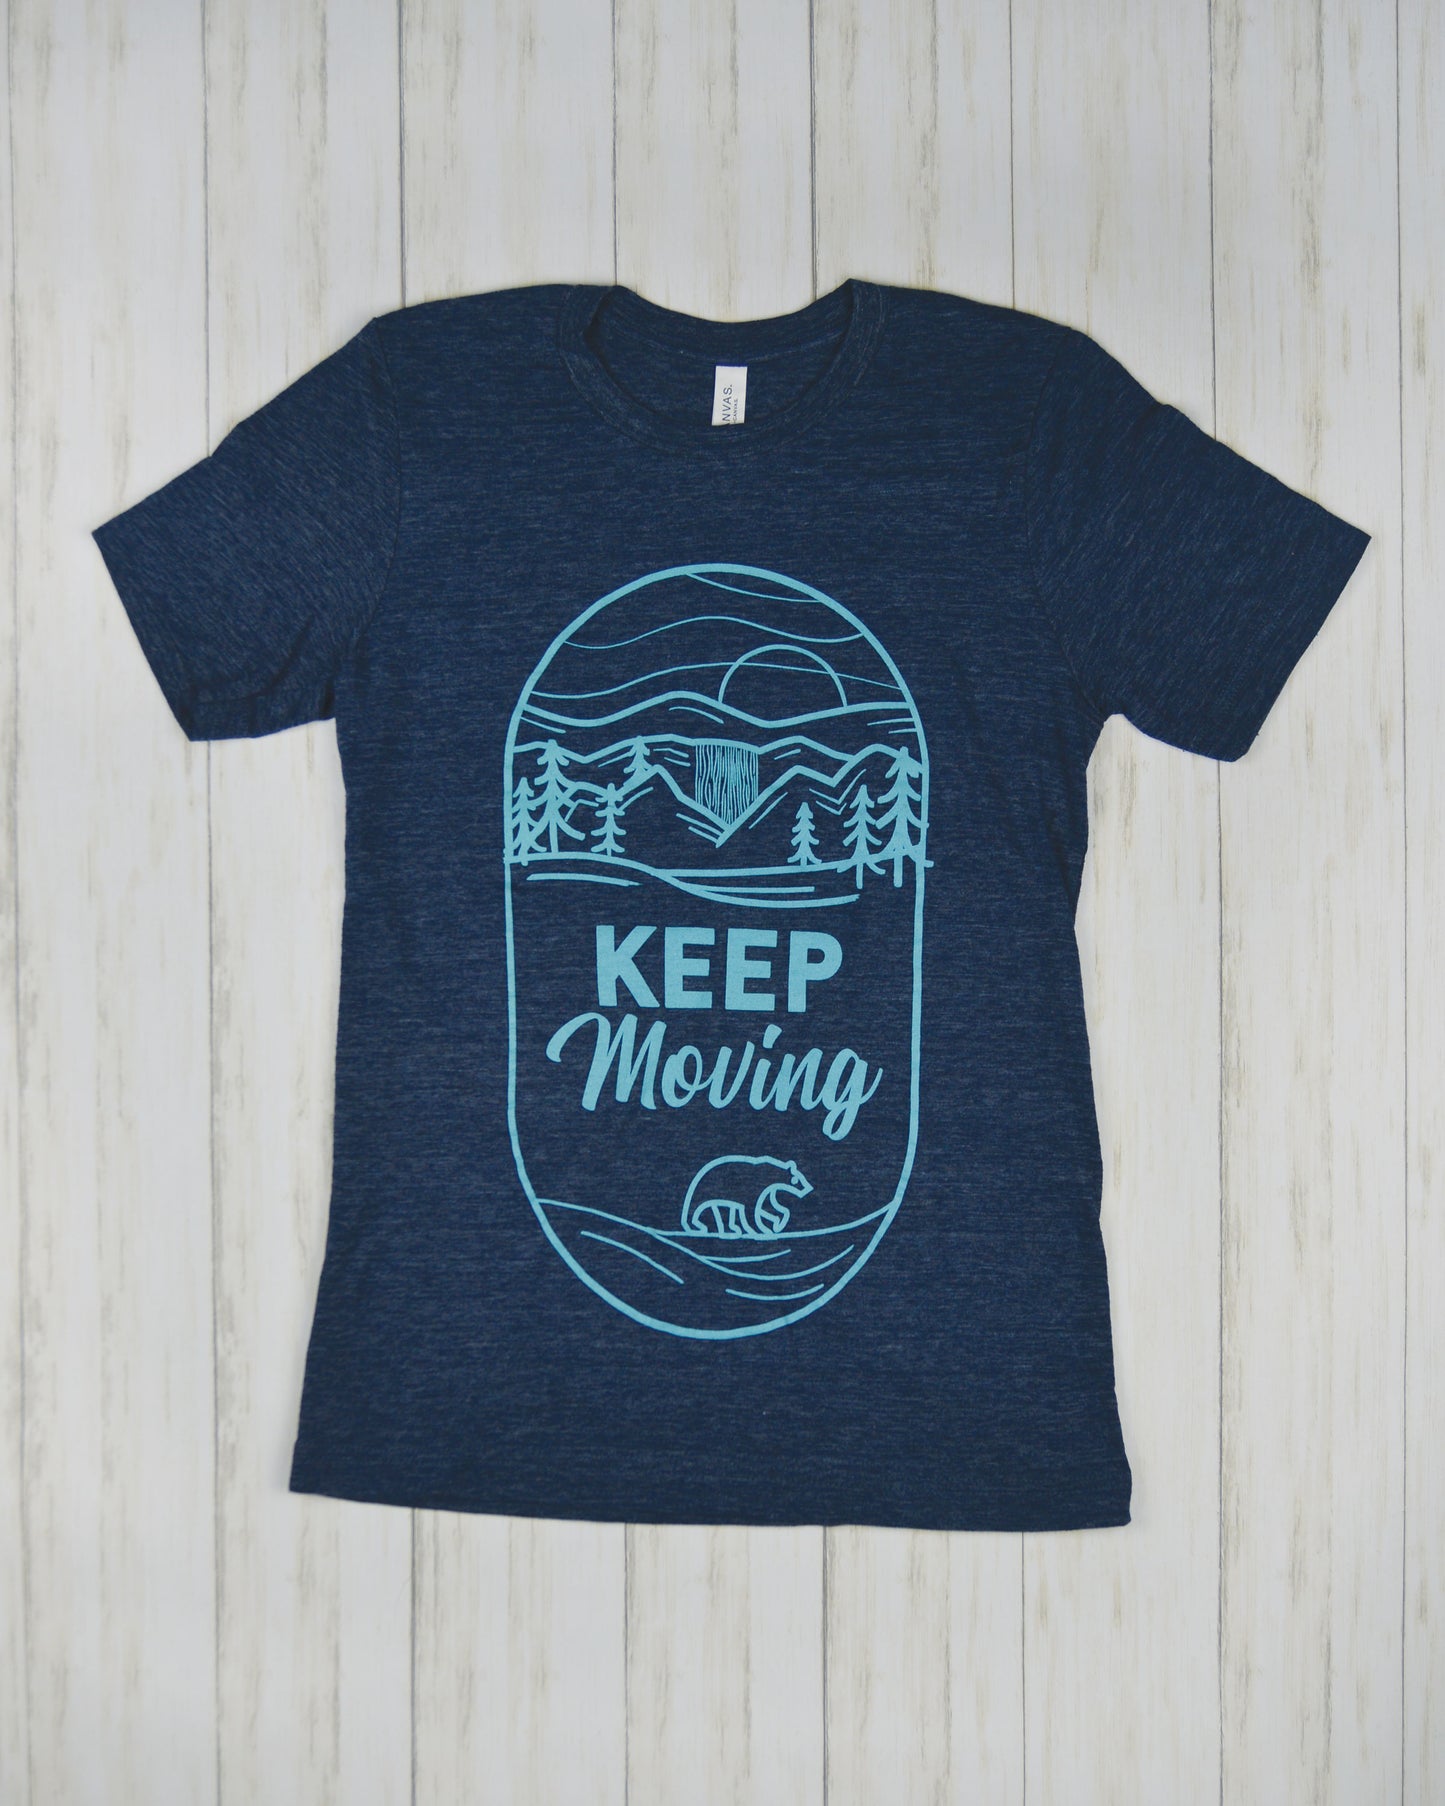 Keep Moving T-Shirt